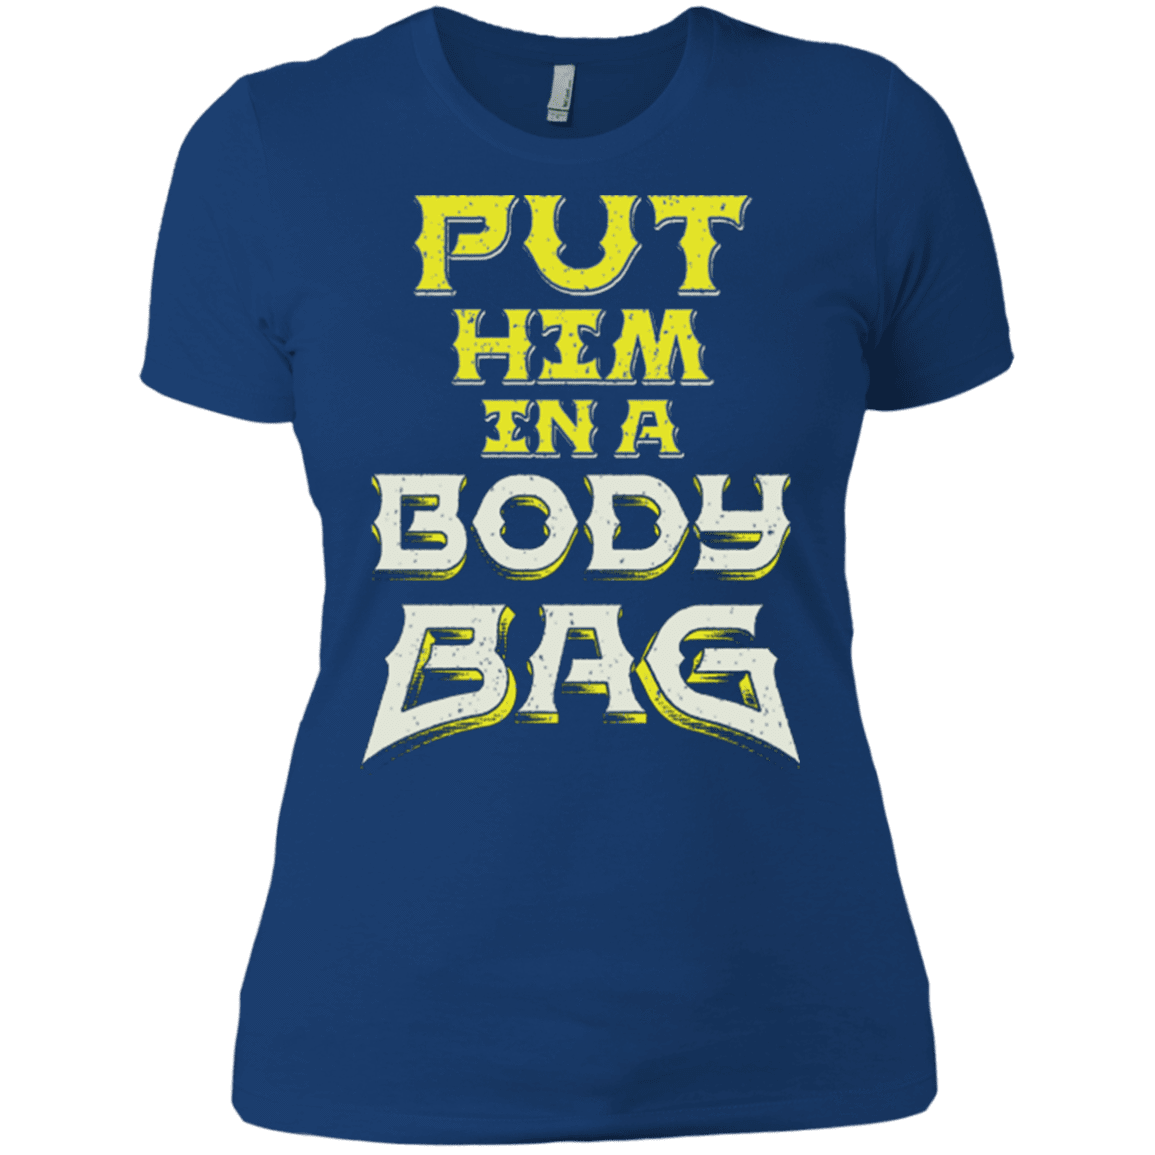 T-Shirts Royal / X-Small BODY BAG Women's Premium T-Shirt